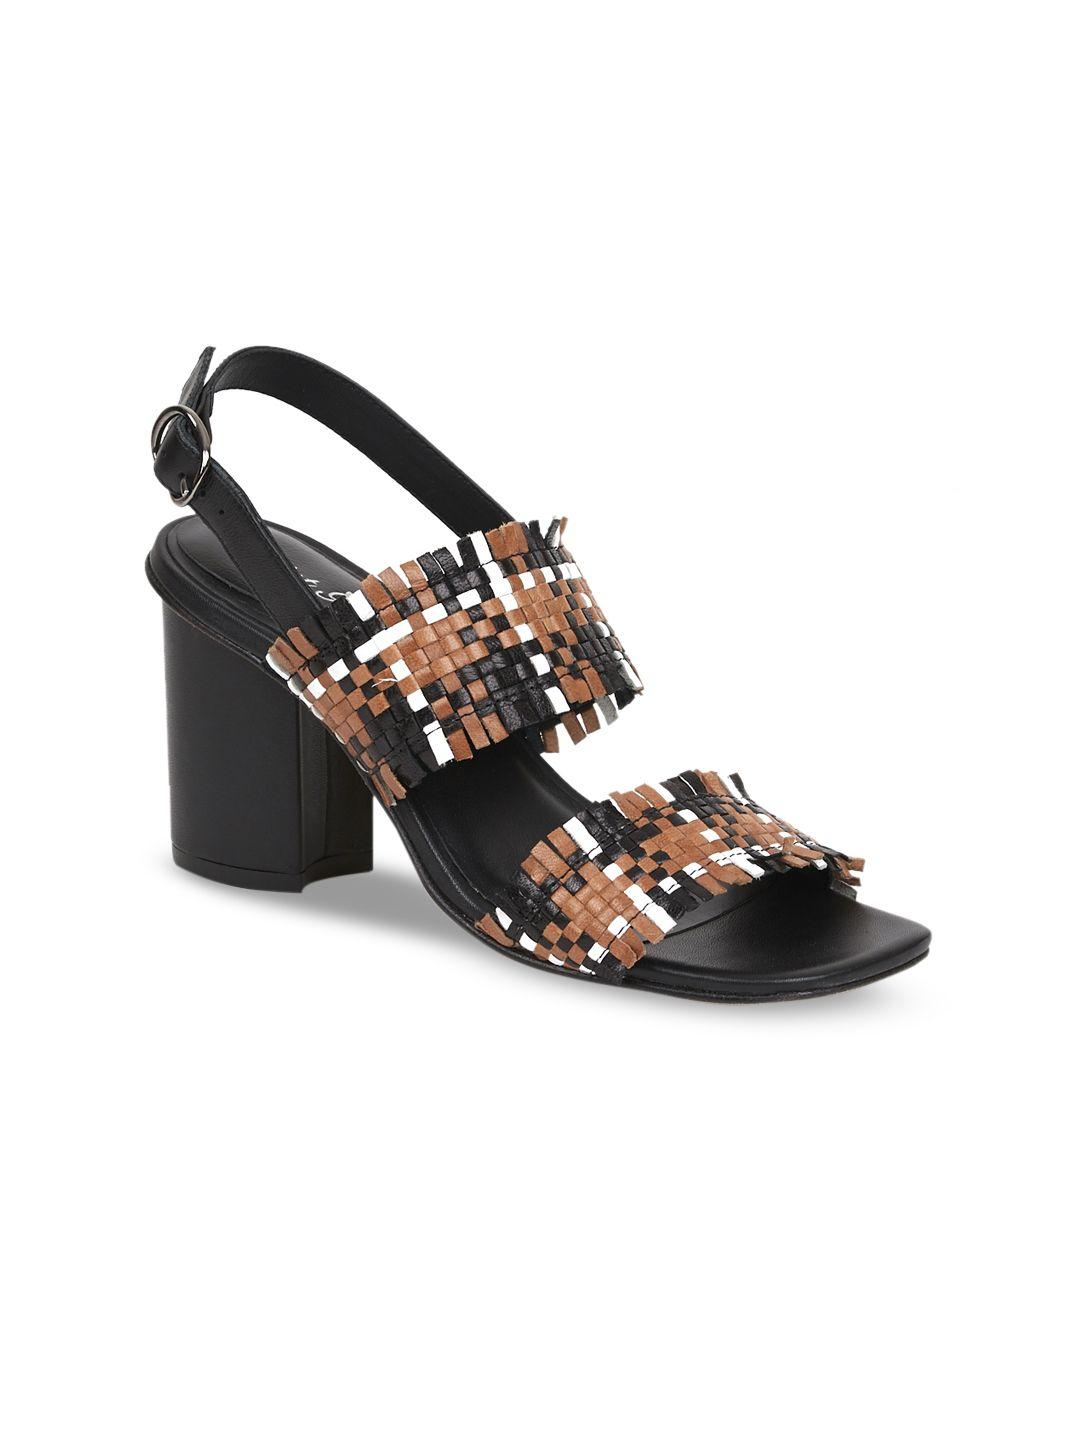 saint g women multicoloured woven design leather sandals